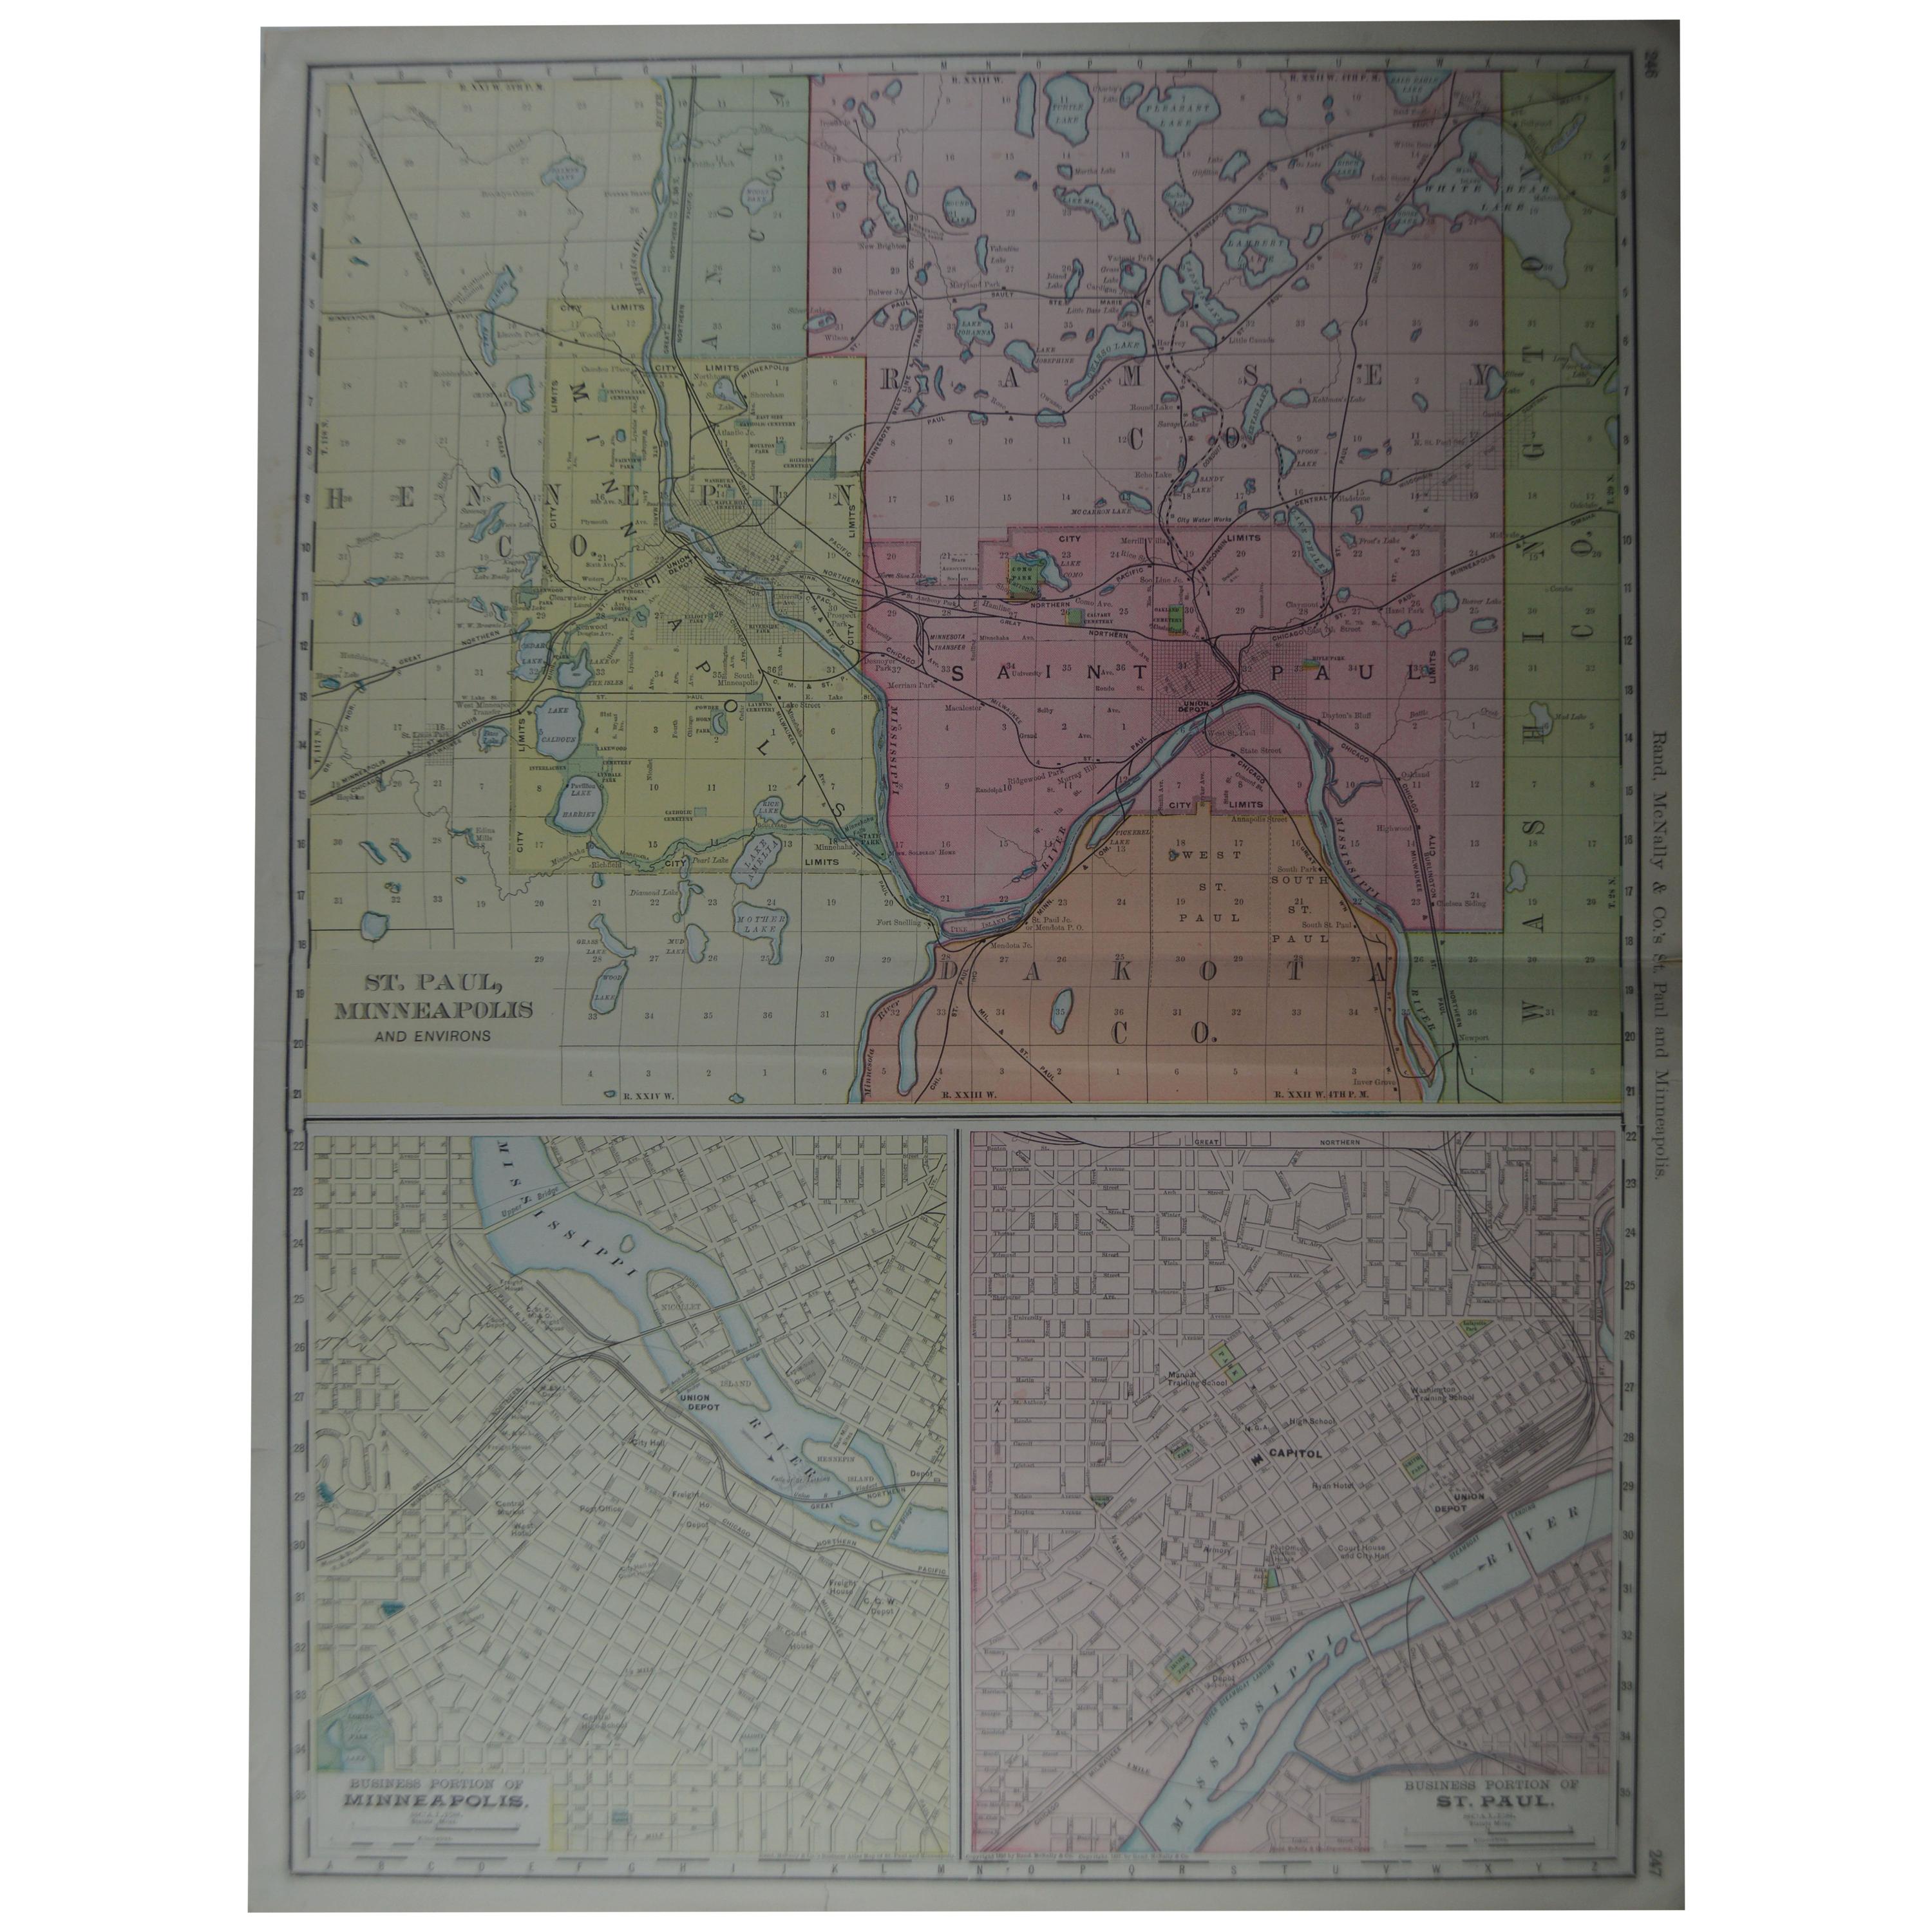 Large Original Antique City Plan of Minneapolis and St Paul, USA, circa 1900